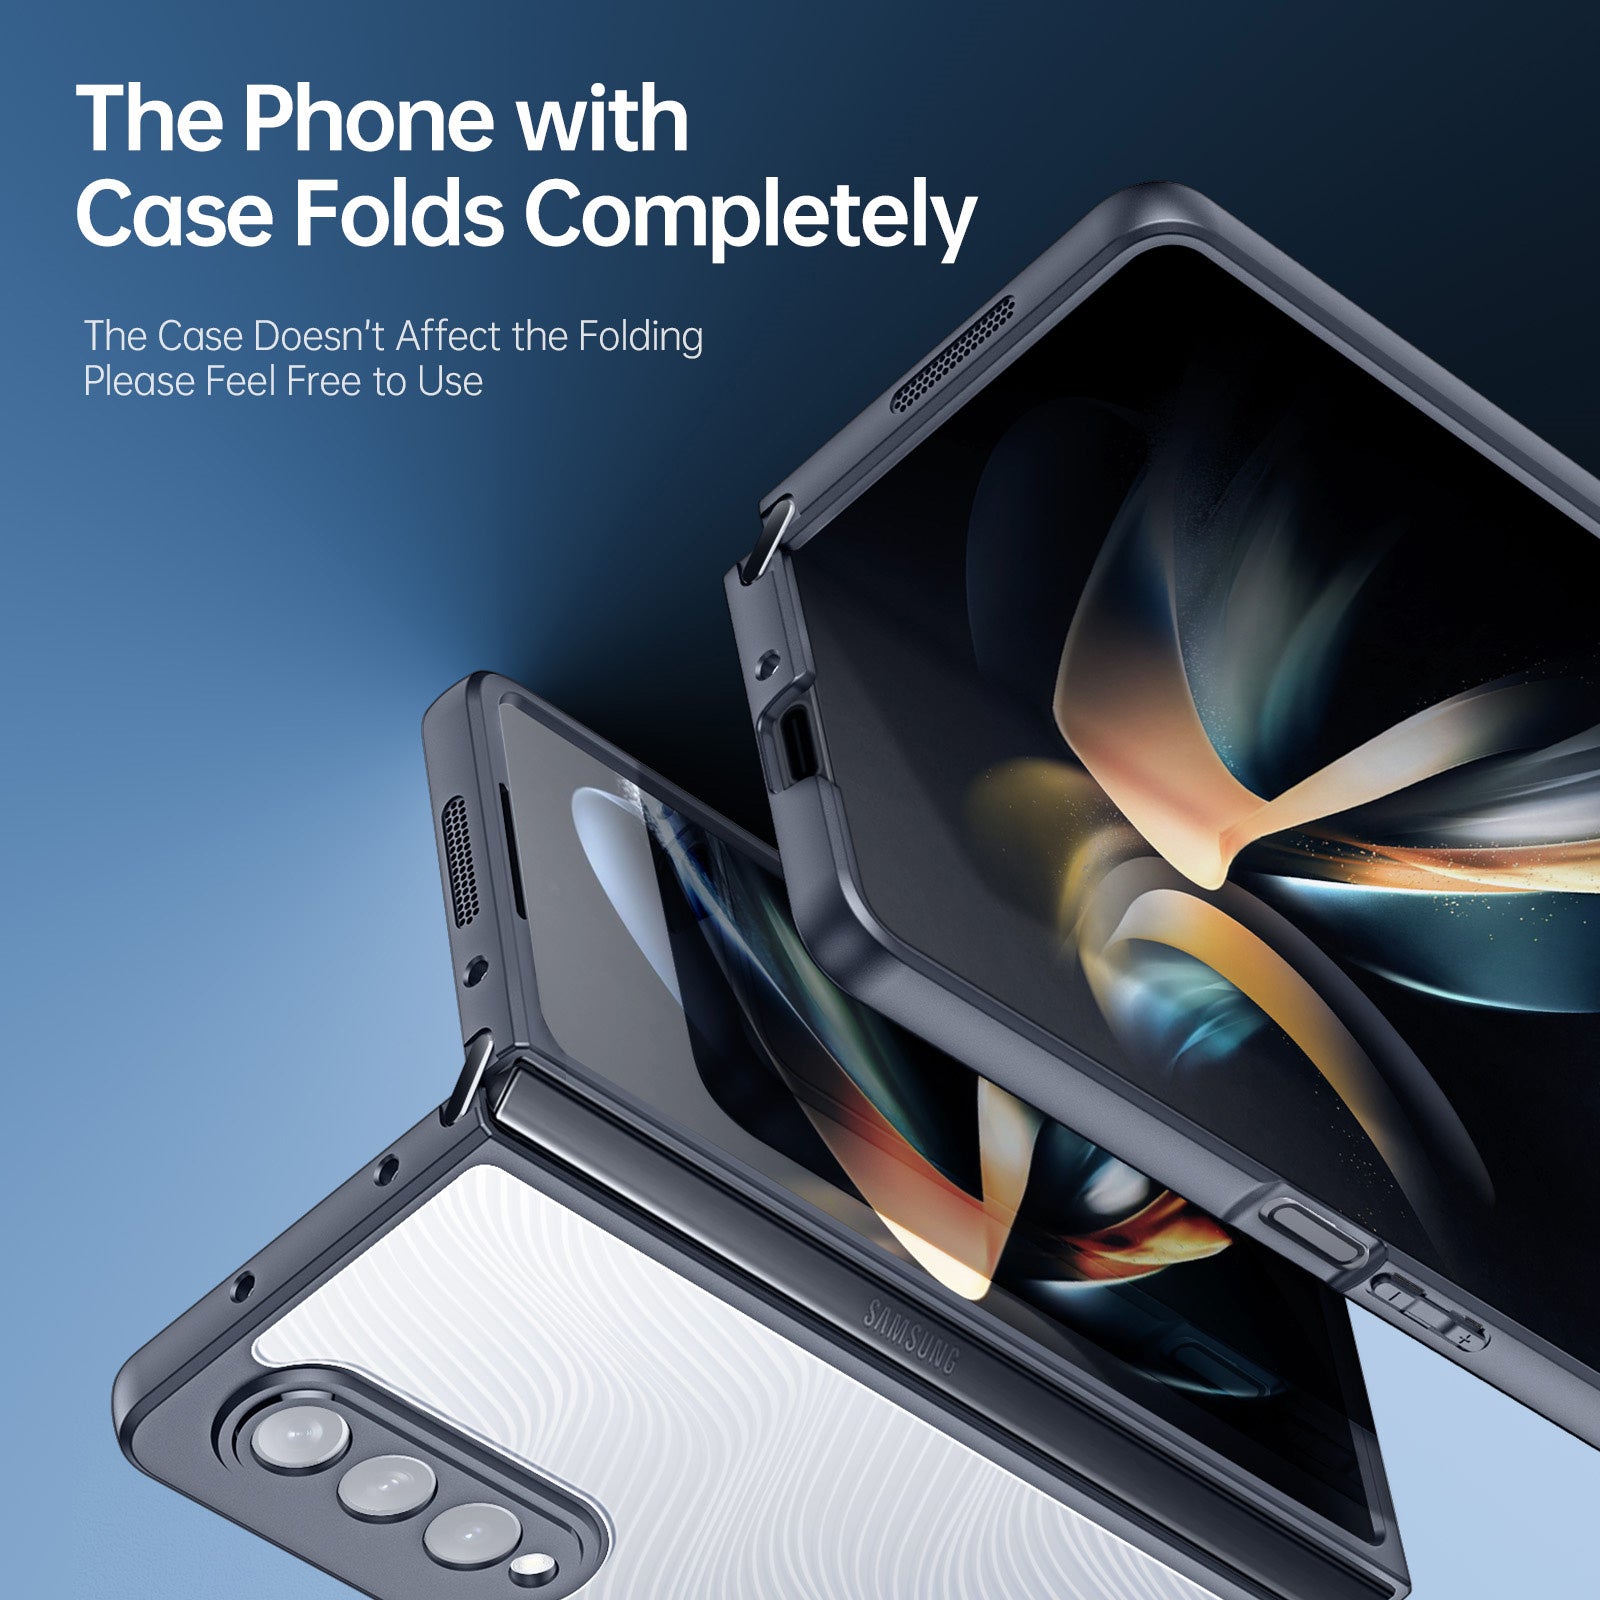 Dux Ducis Aimo Series Case Samsung Z Fold 4